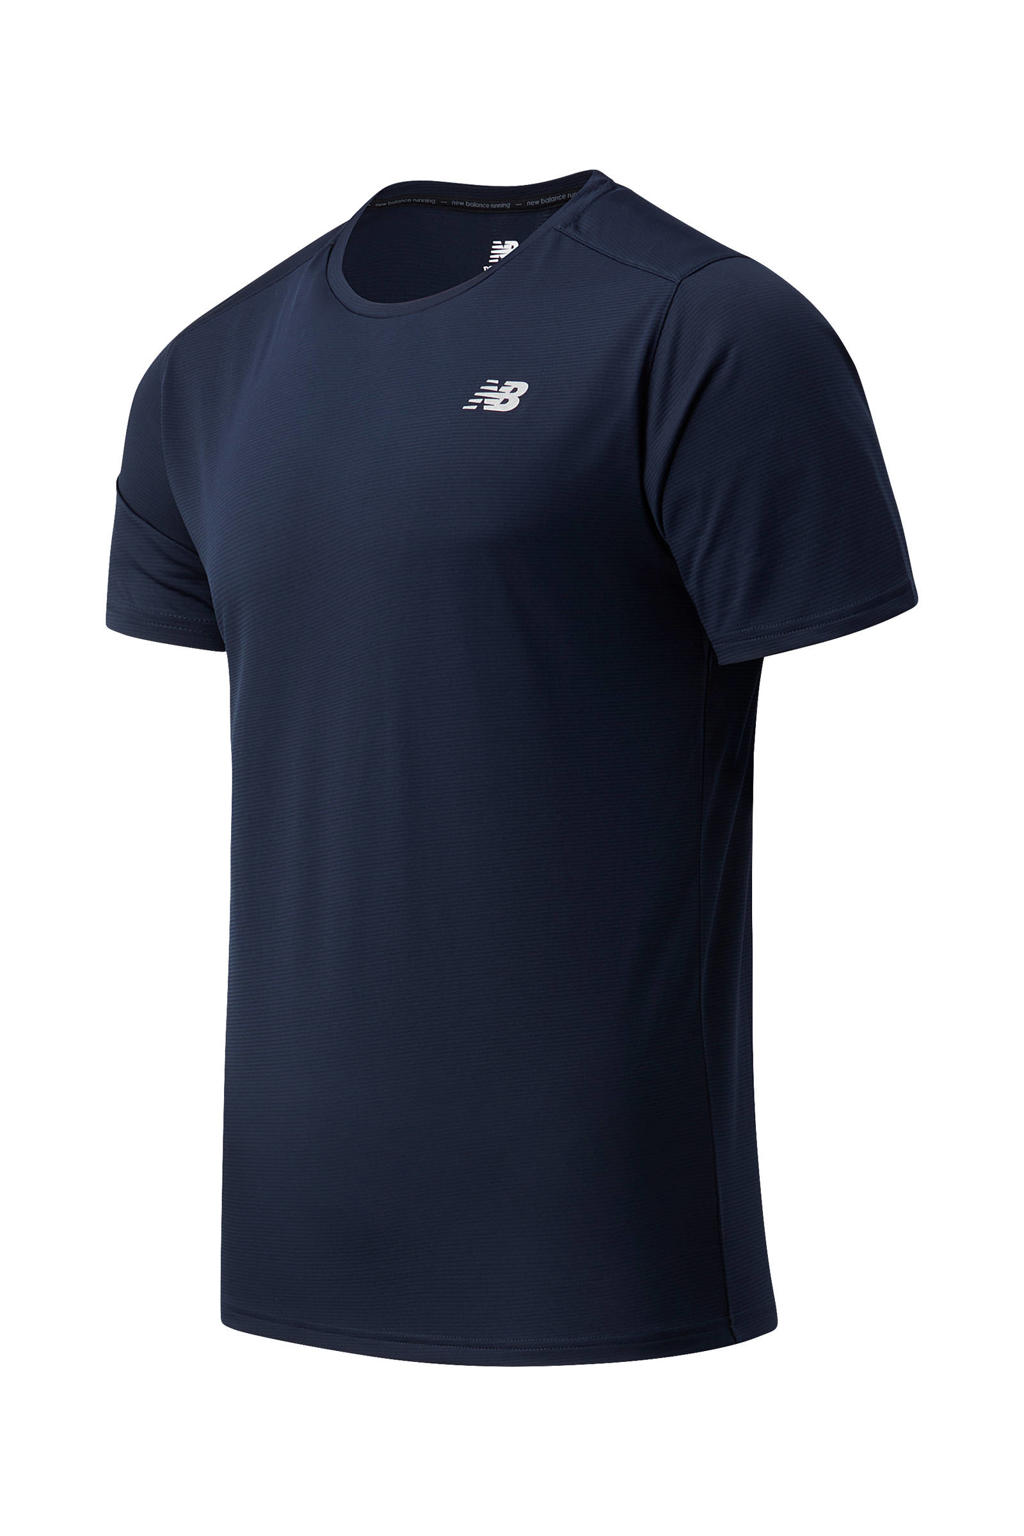 New Balance   sport T-shirt donkerblauw